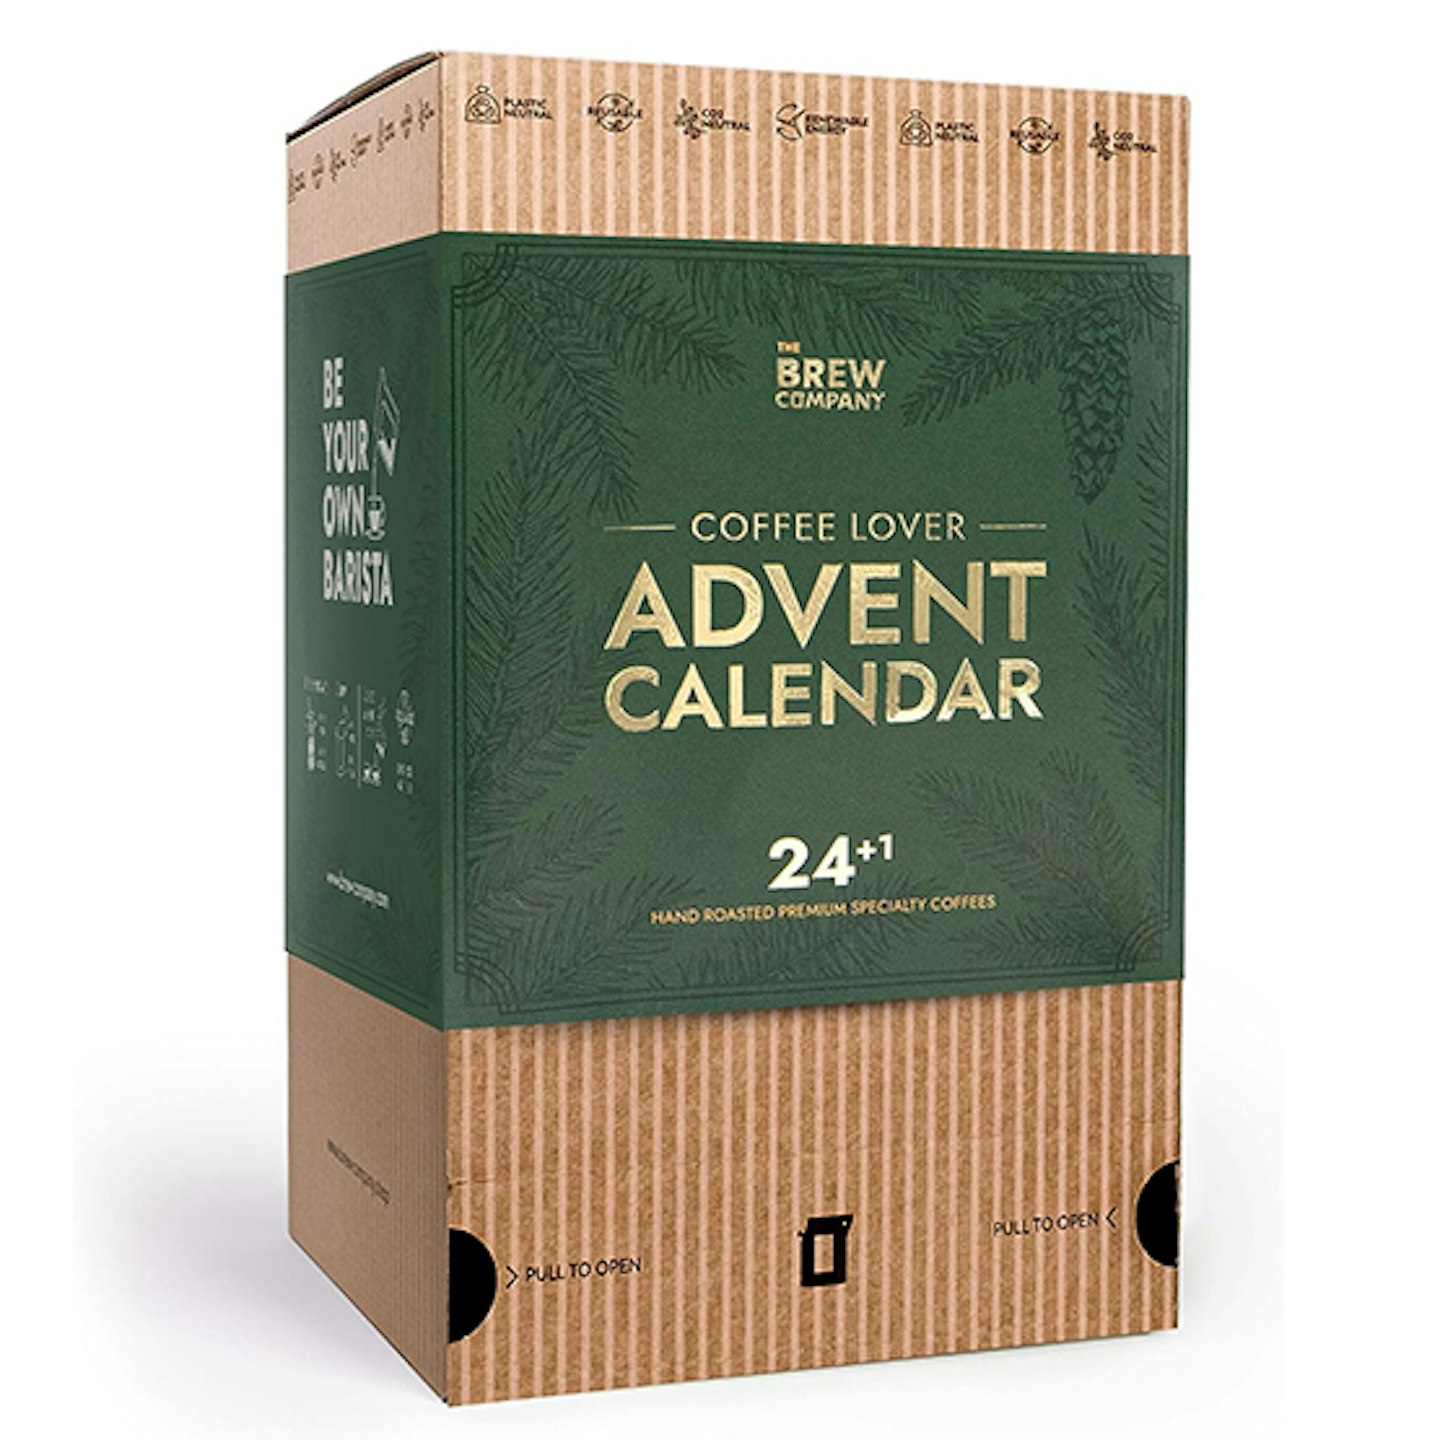 Gourmet coffee advent calendar